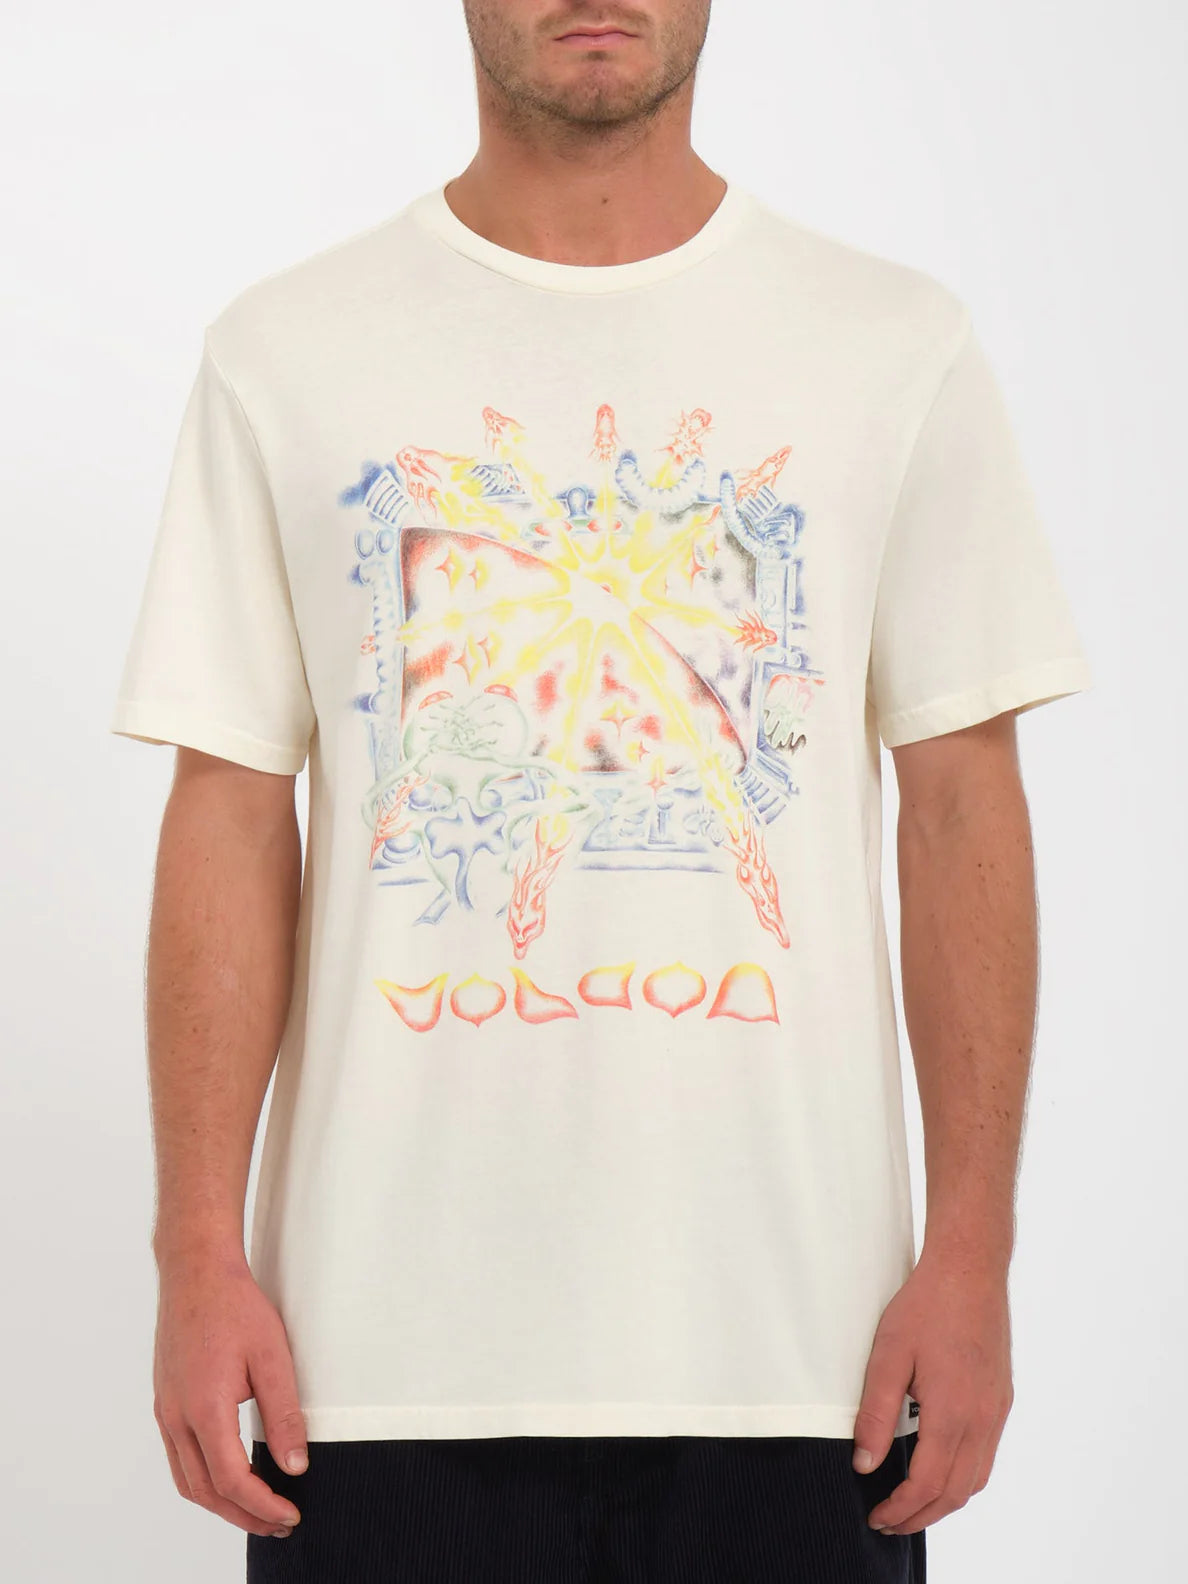 Camiseta Volcom Sam Ryser - Off White | Camisetas de hombre | Camisetas manga corta de hombre | Volcom Shop | surfdevils.com